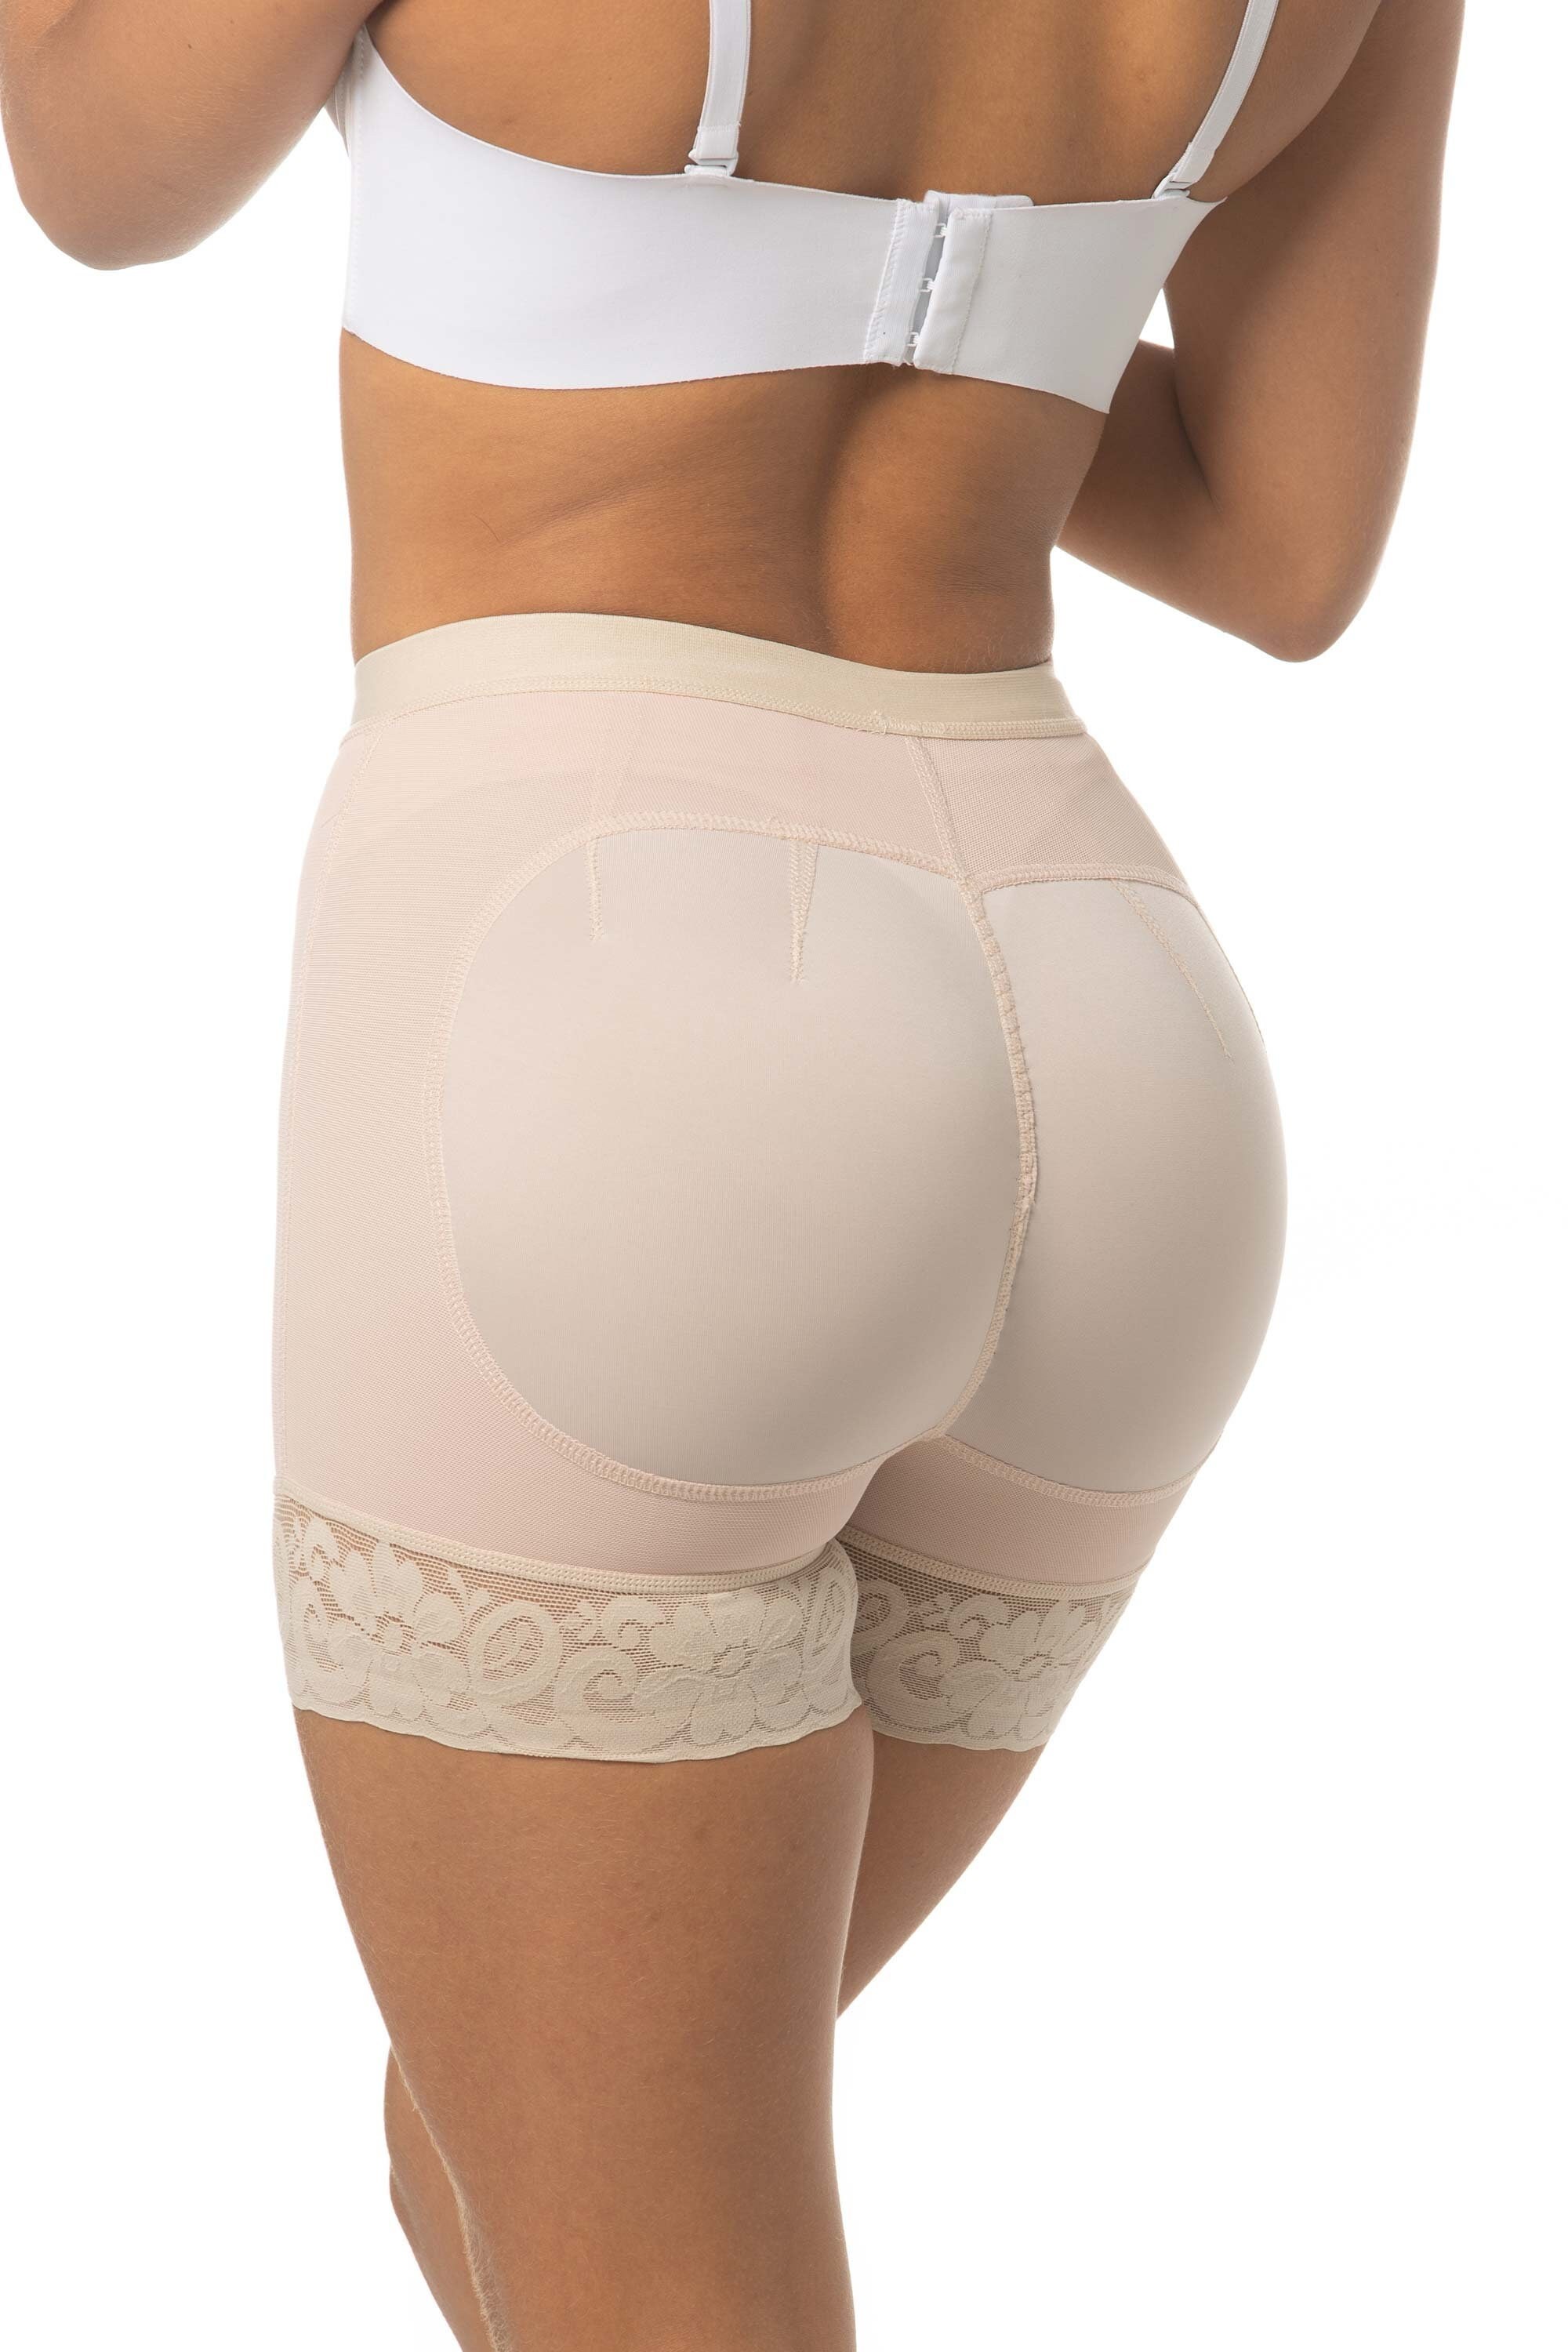 Flat Belly Sheathing Panties Colombian Reductive Girdles Waist